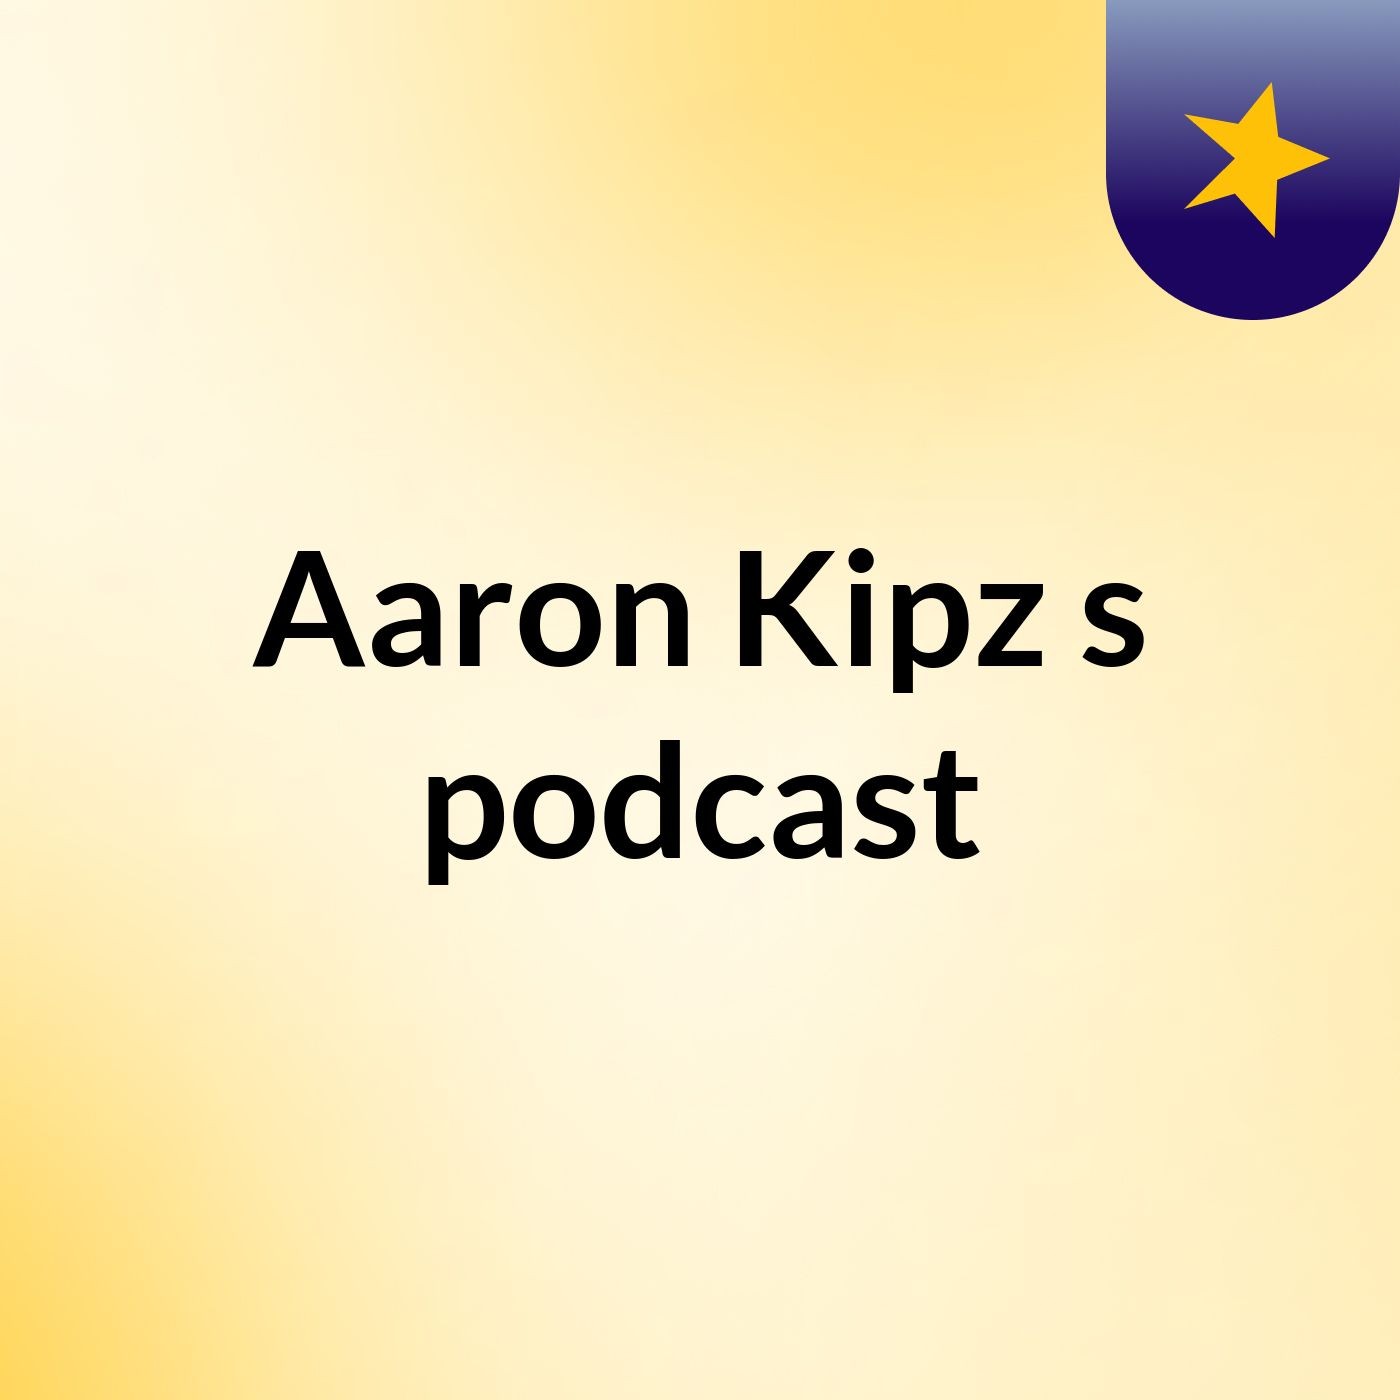 Aaron Kipz's podcast